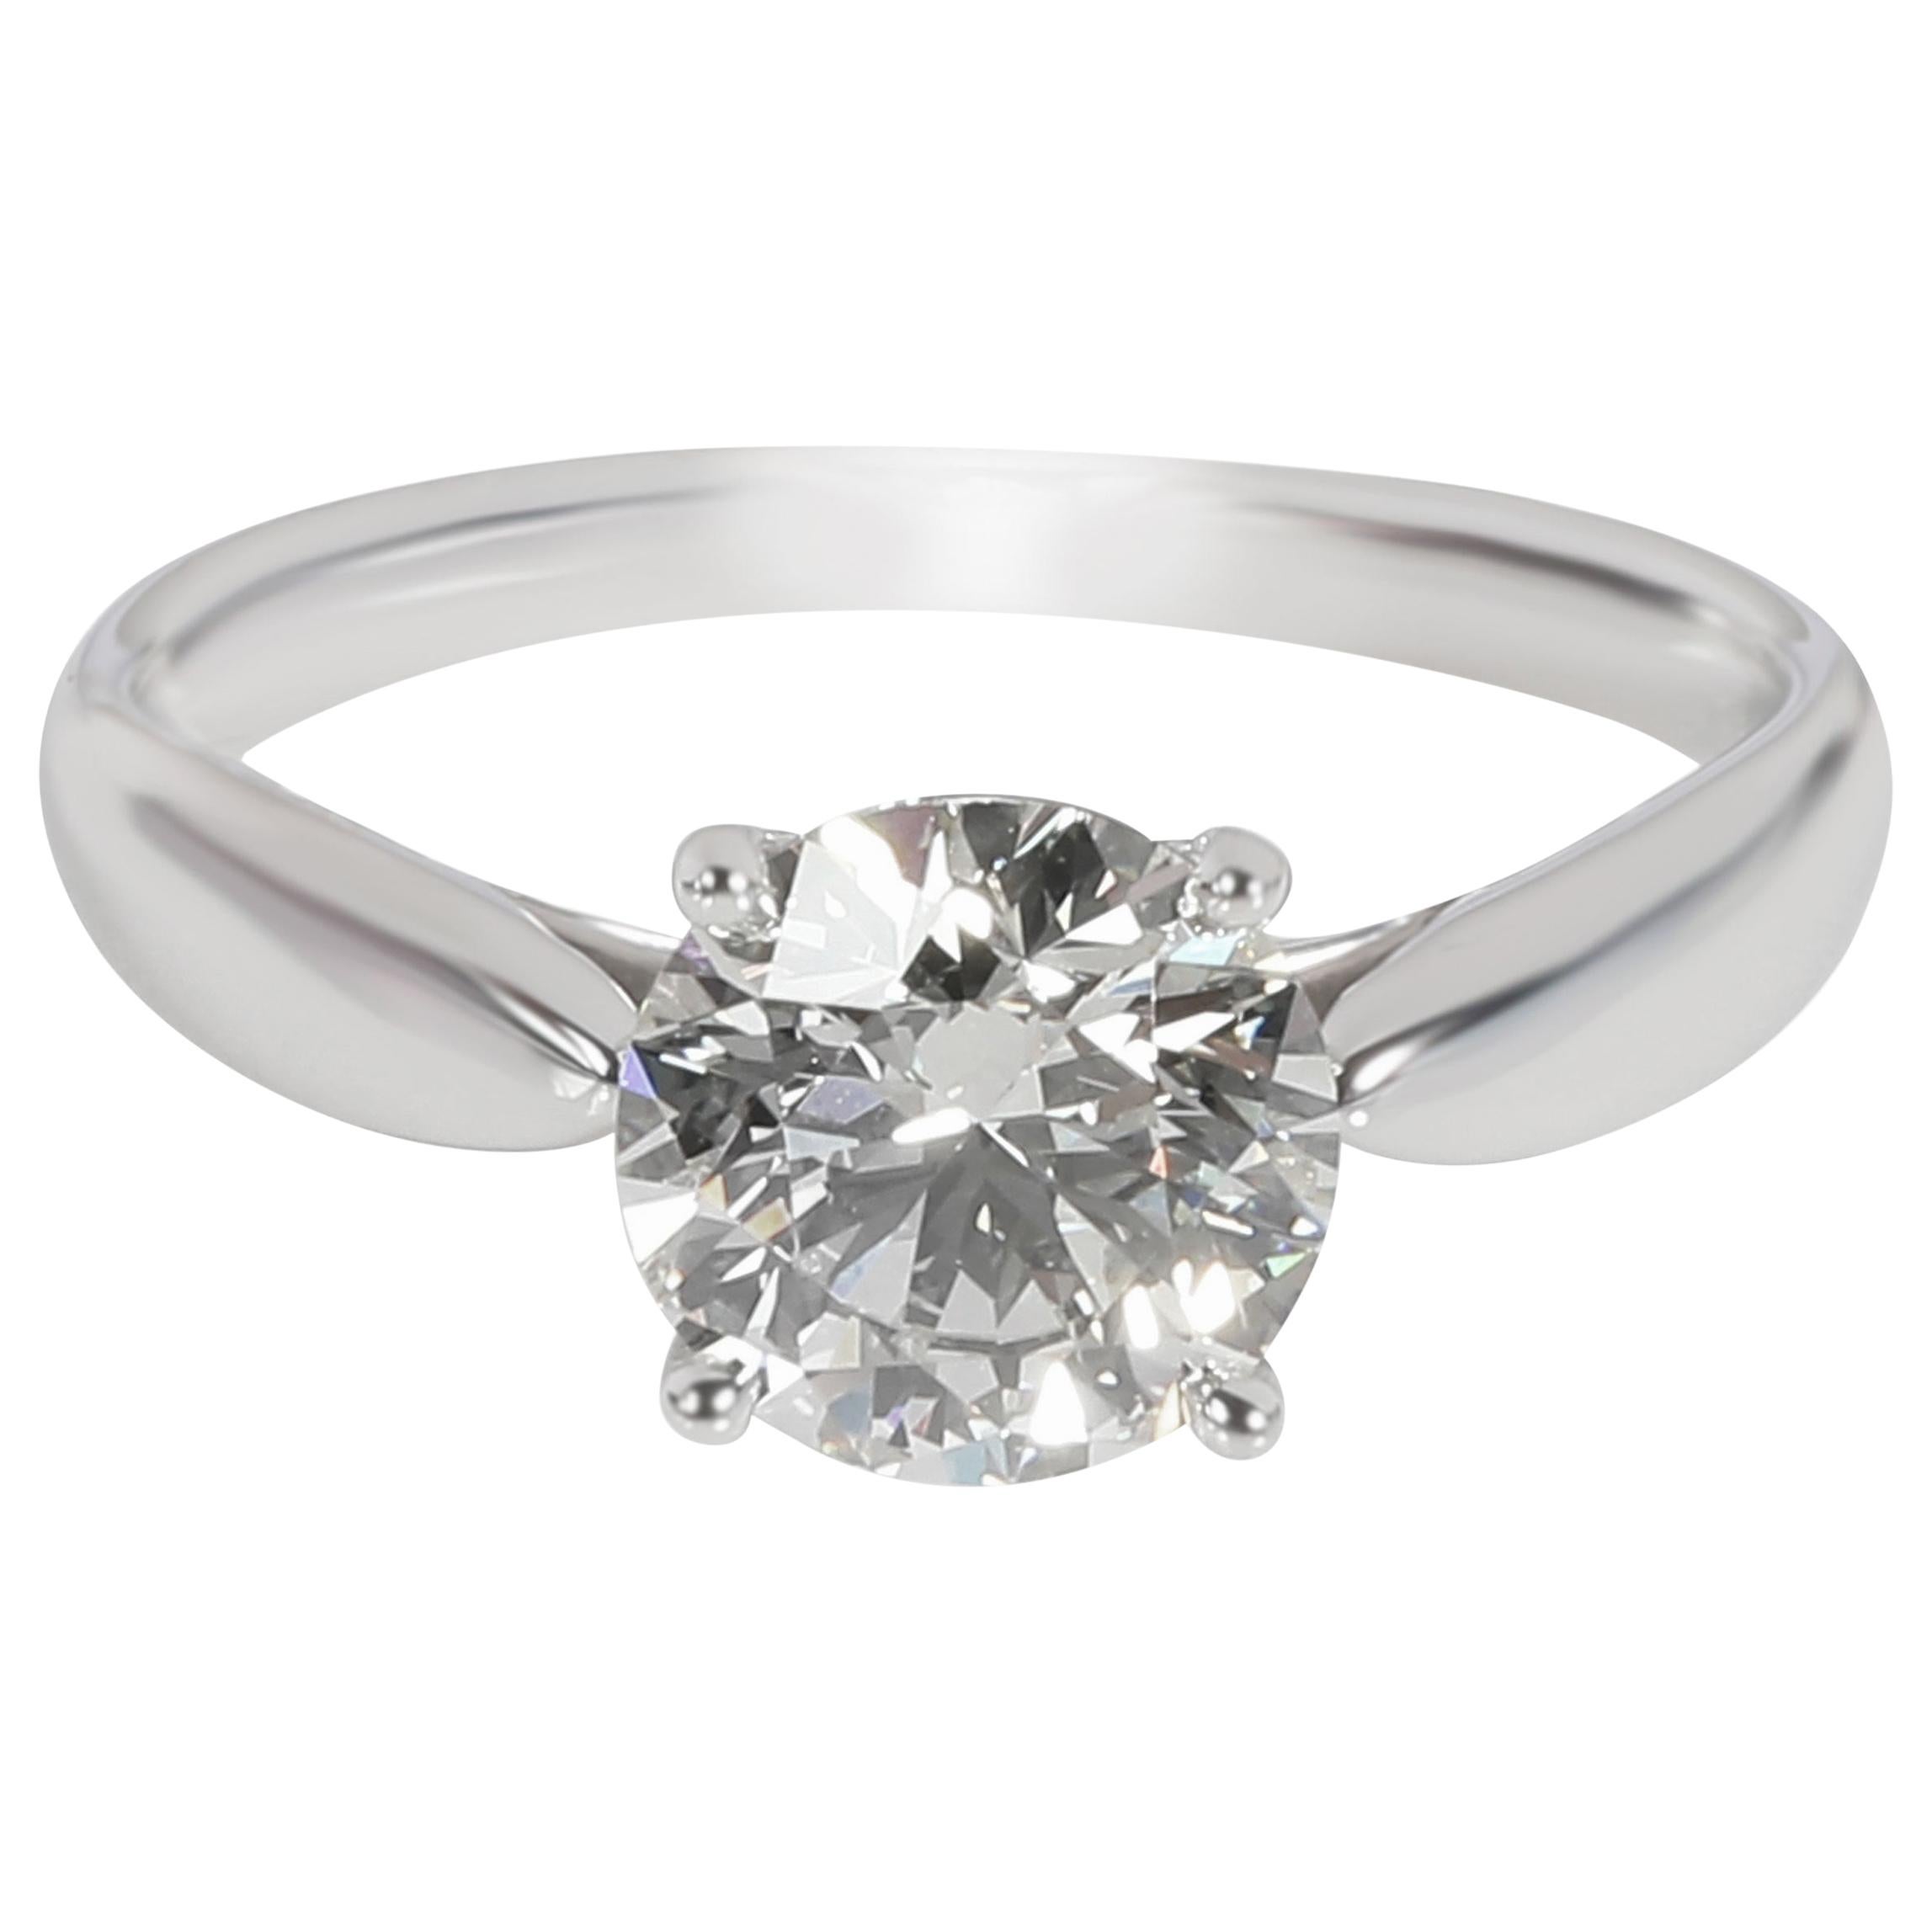 Tiffany & Co. Harmony Diamond Engagement Ring in Platinum I VS2 1.22 Carat